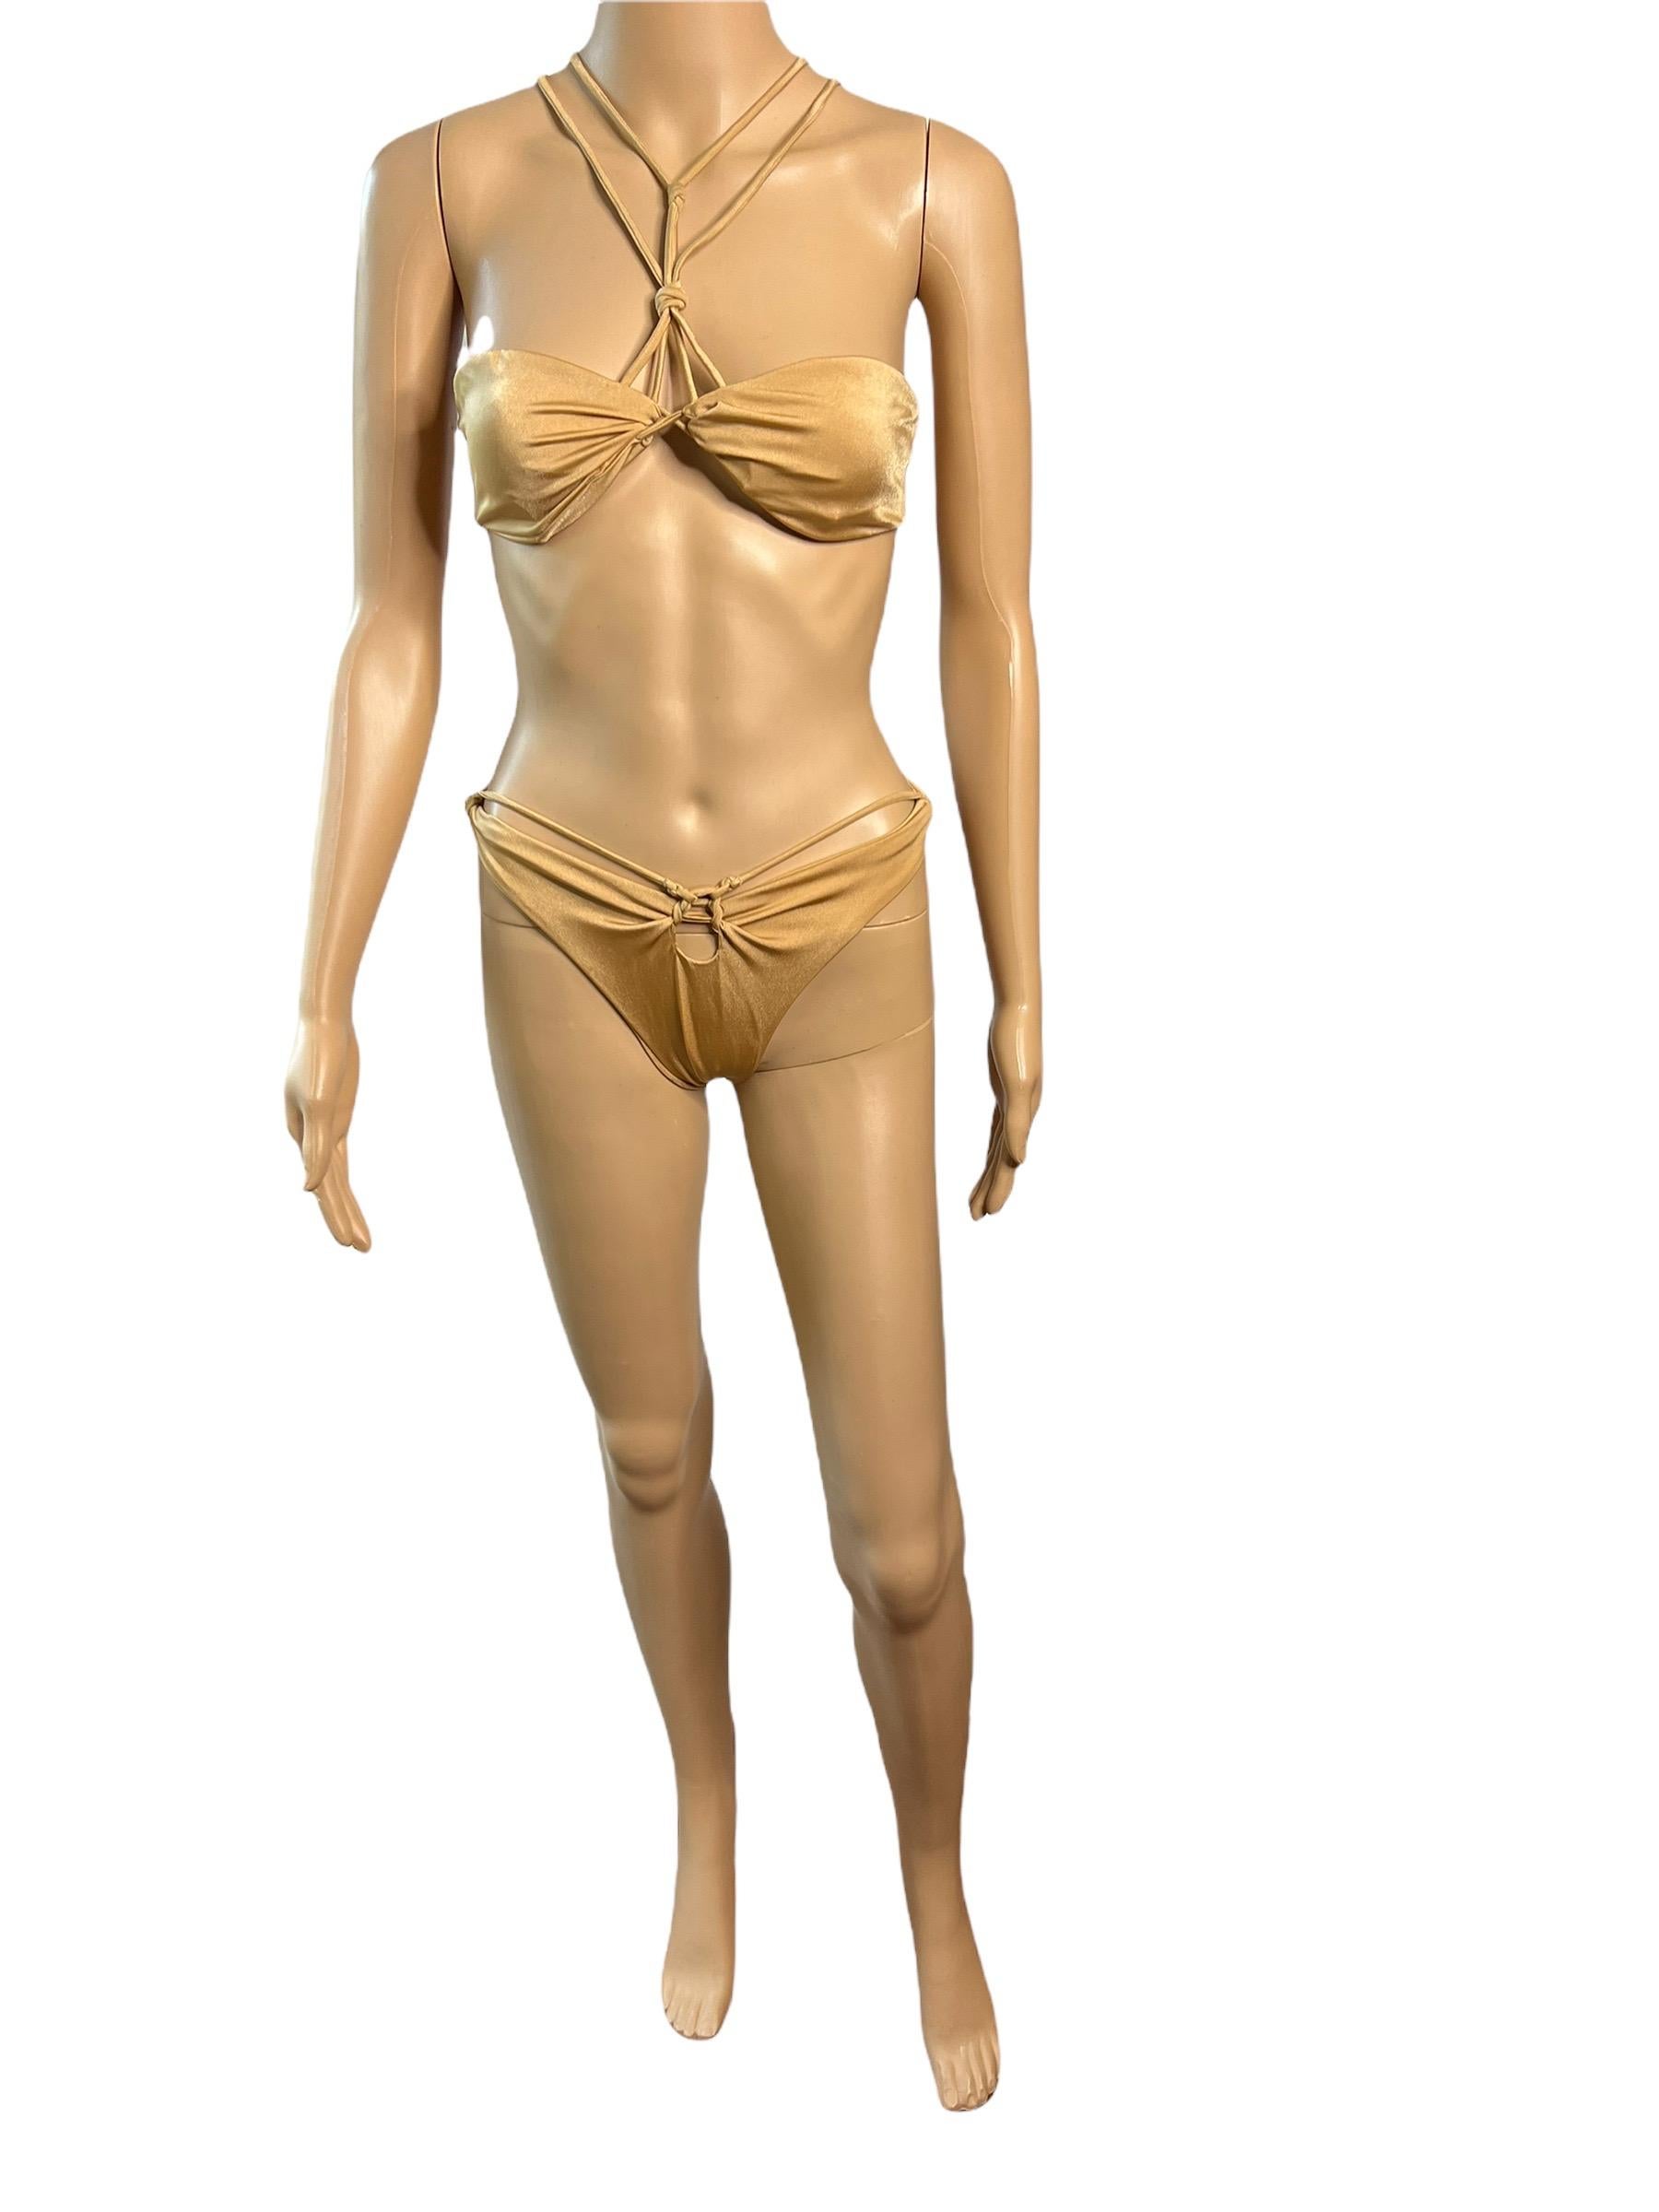 Women's Tom Ford for Gucci c.2004 Bondage Strappy Gold 2 Piece Bikini Swimsuit Swimwear